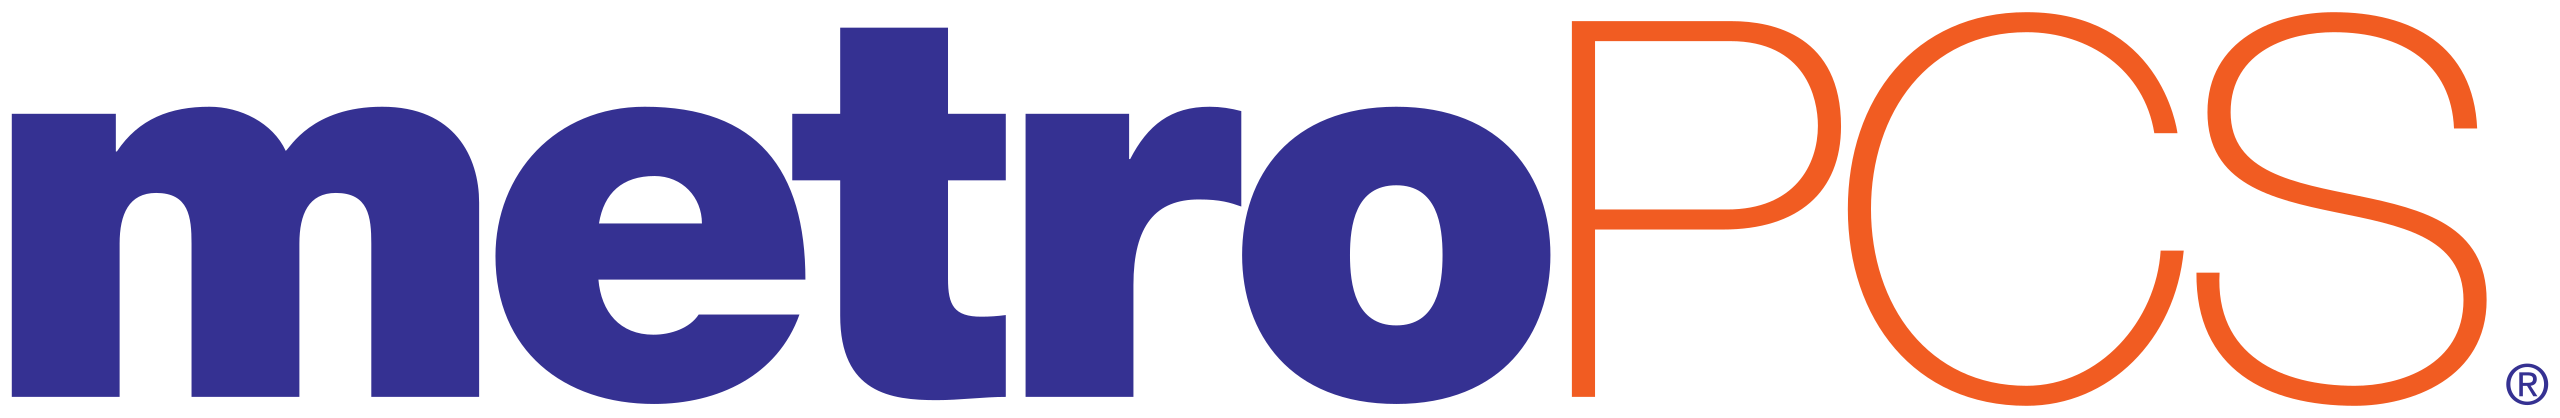 MetroPCS Company Logo